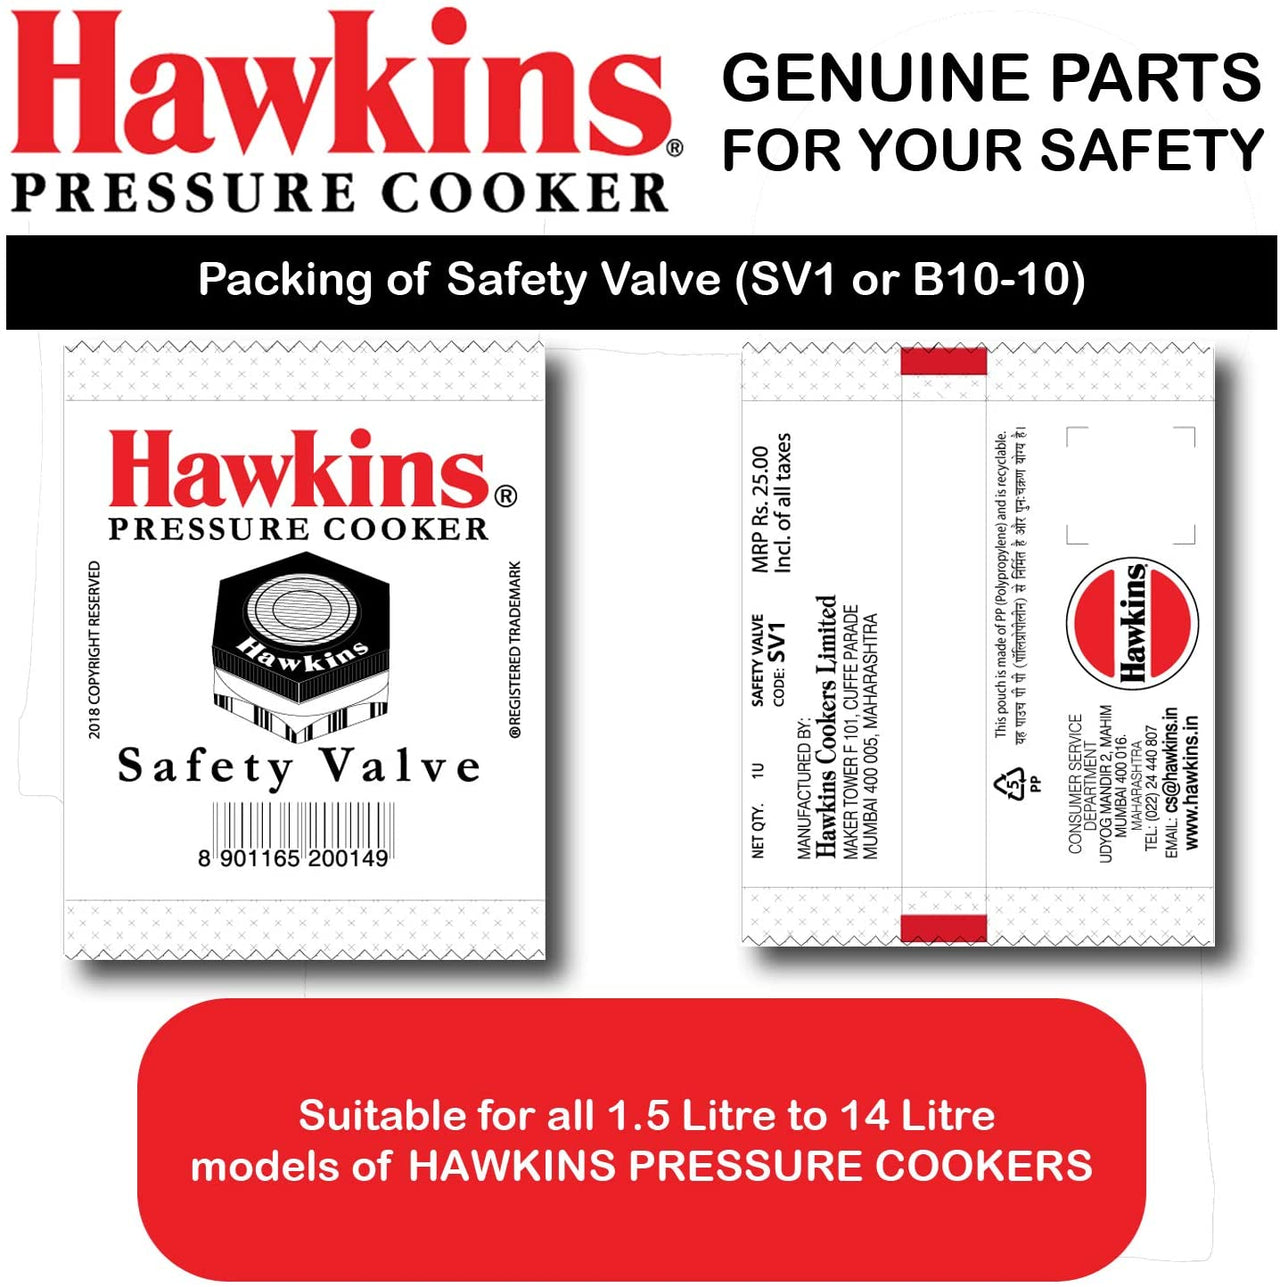 Hawkins Pressure Cooker Safety Valve for 1.5 to 14 Litre